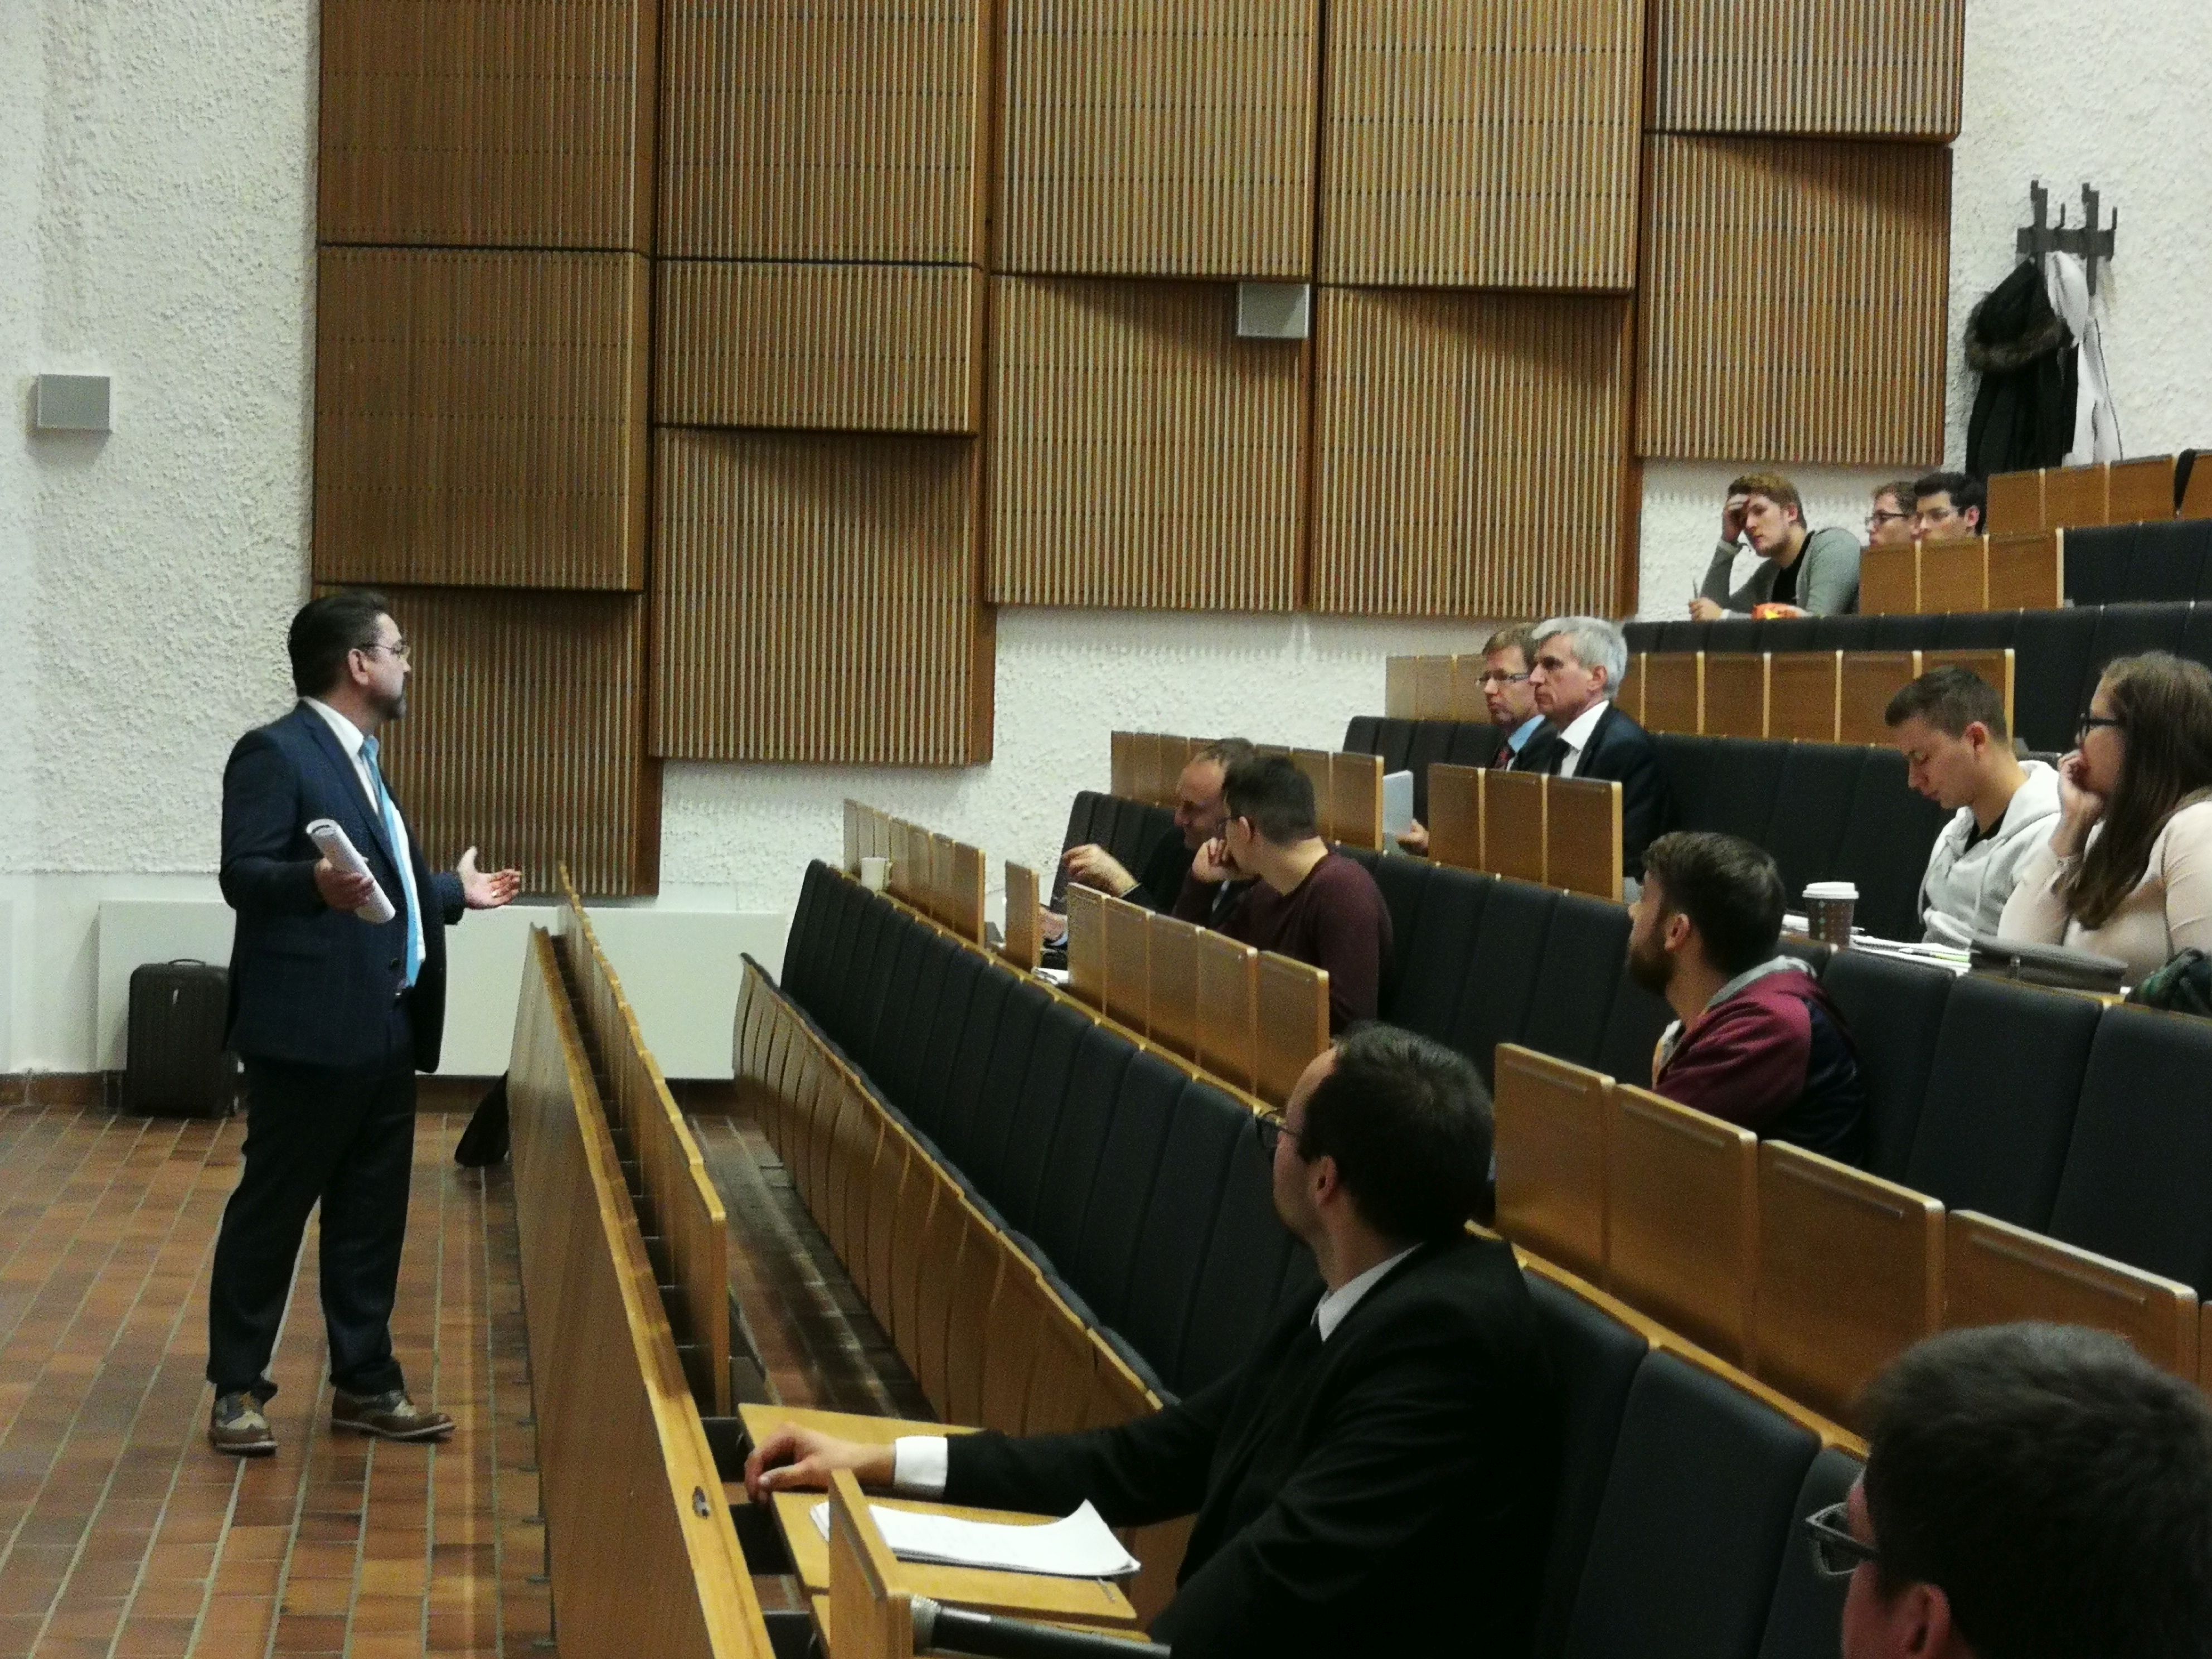 Foto: Prof. Zirkler hält im Hörsaal einen Vortrag.